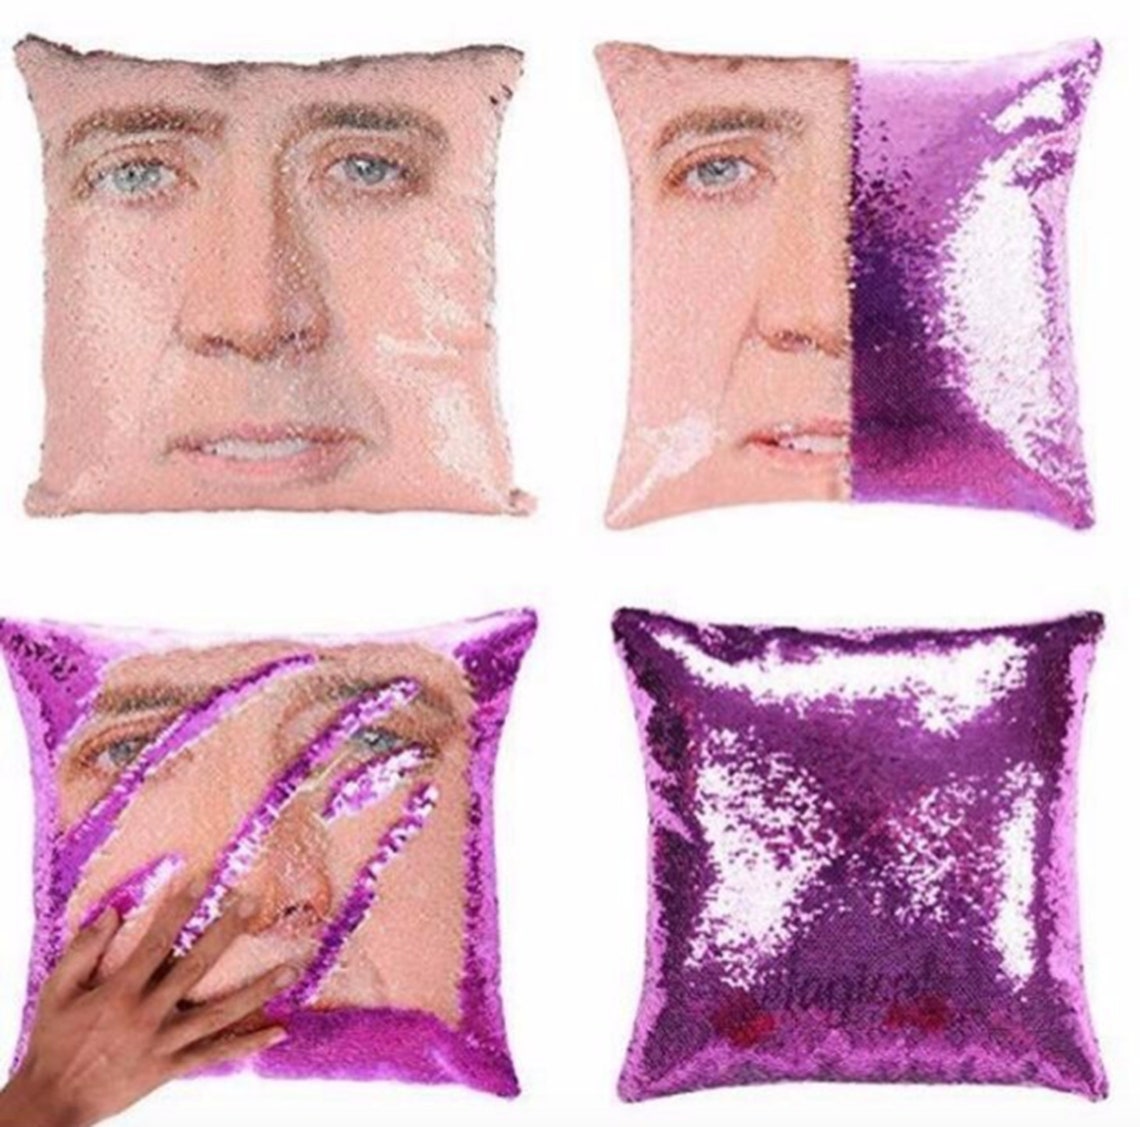 Nicolas Cage Magic Pillow / Nicolas Cage Face Funny Meme / | Etsy